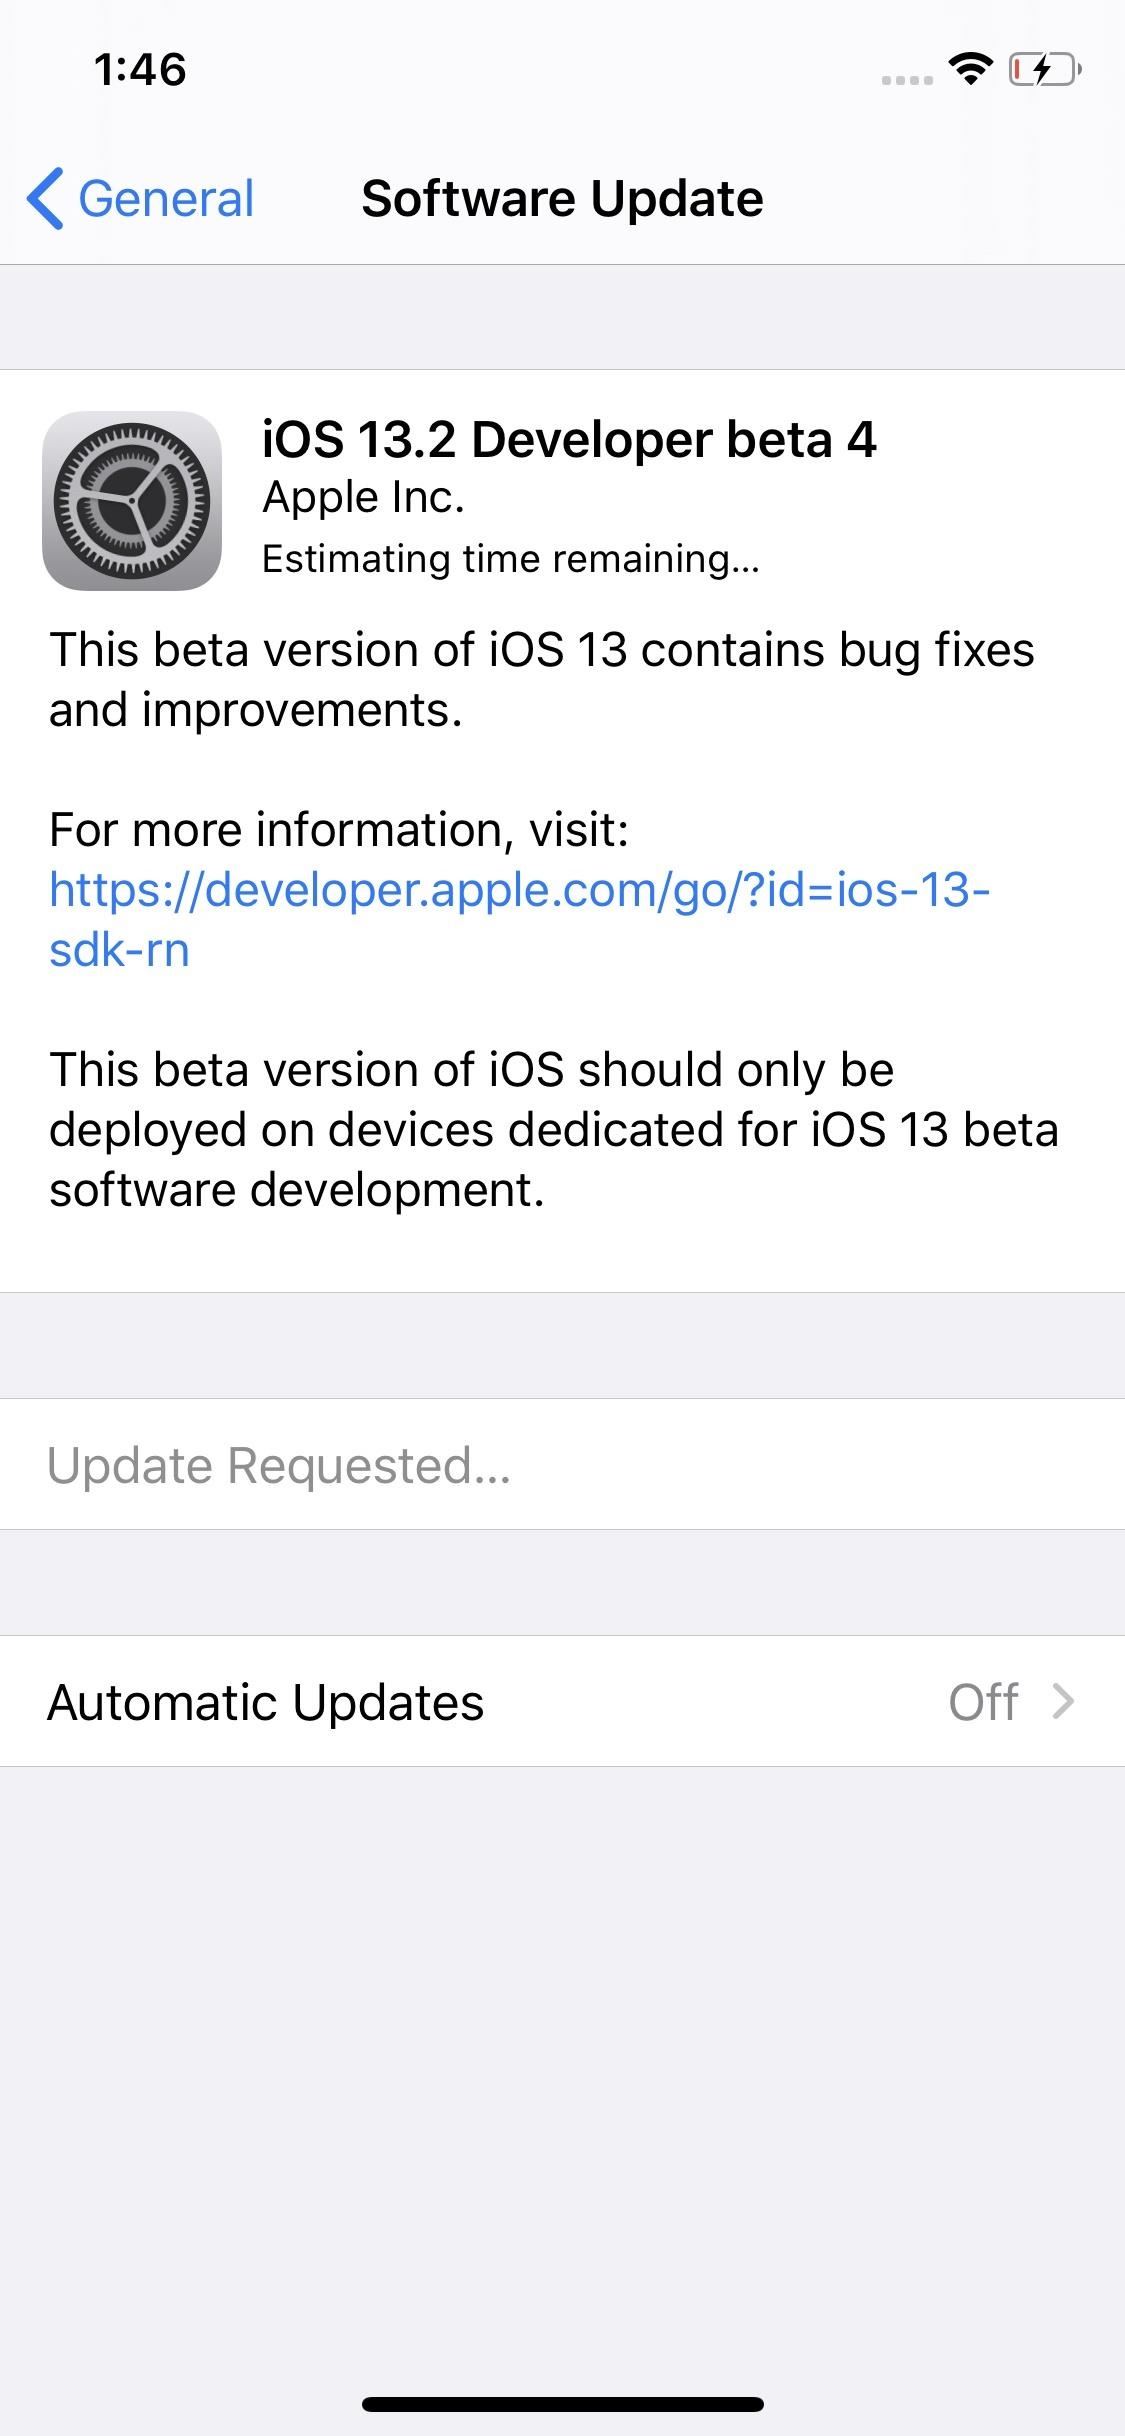 Apple Releases iOS 13.2 Developer Beta 4 for iPhone